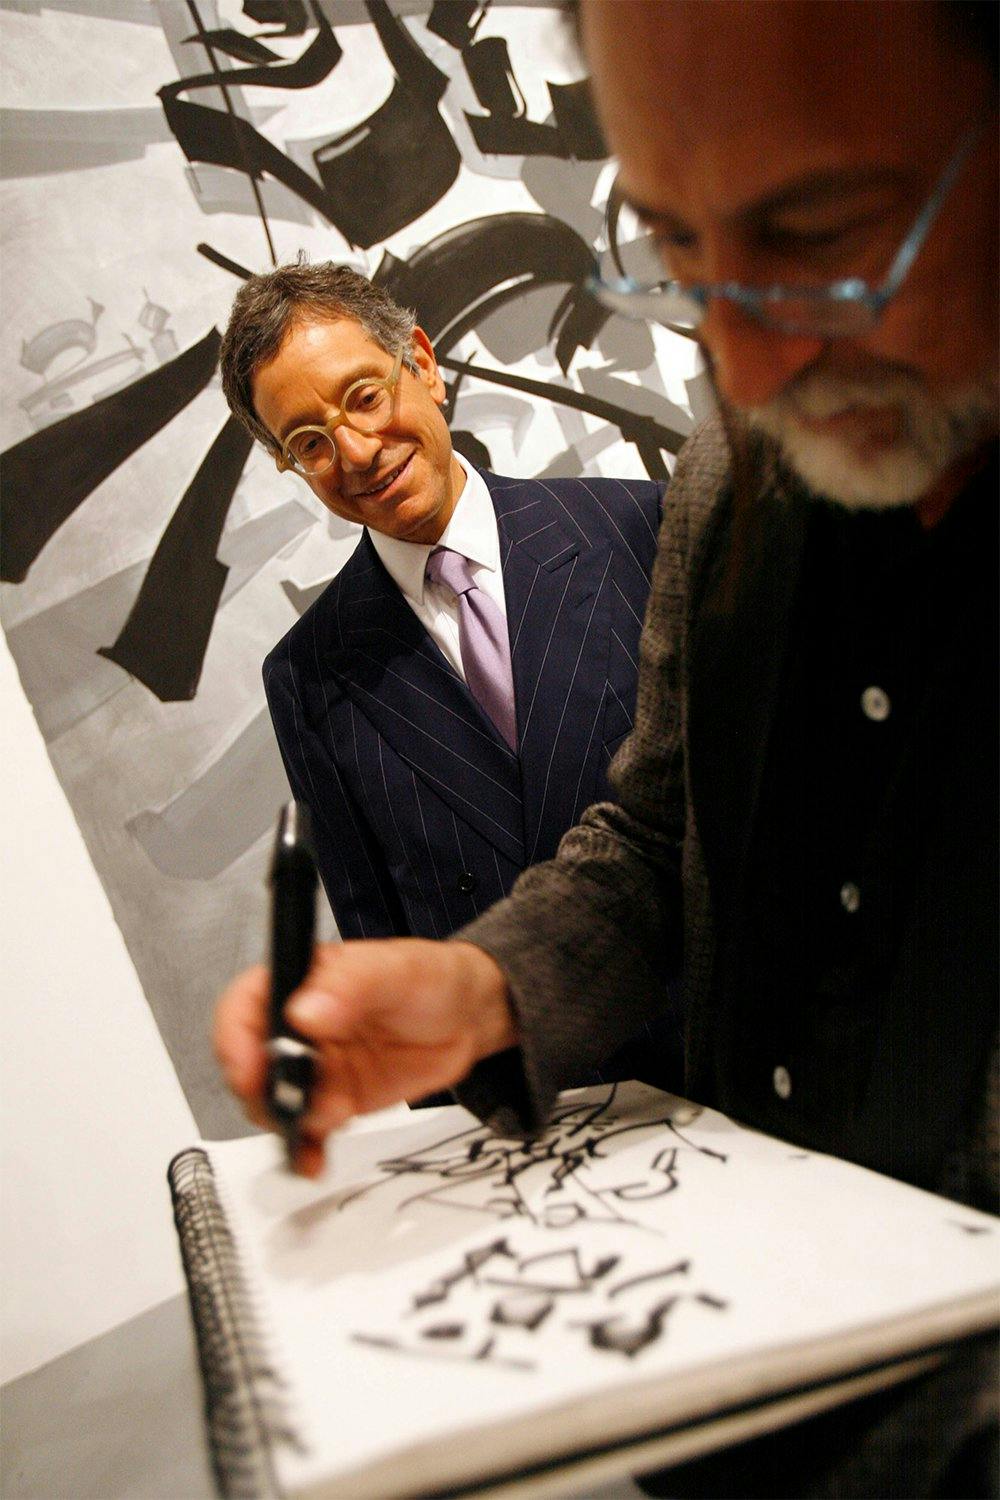 MOCA director Jeffrey Deitch, left, watch as artist Chaz Bojorquez draws on a pad during the member's reception of 